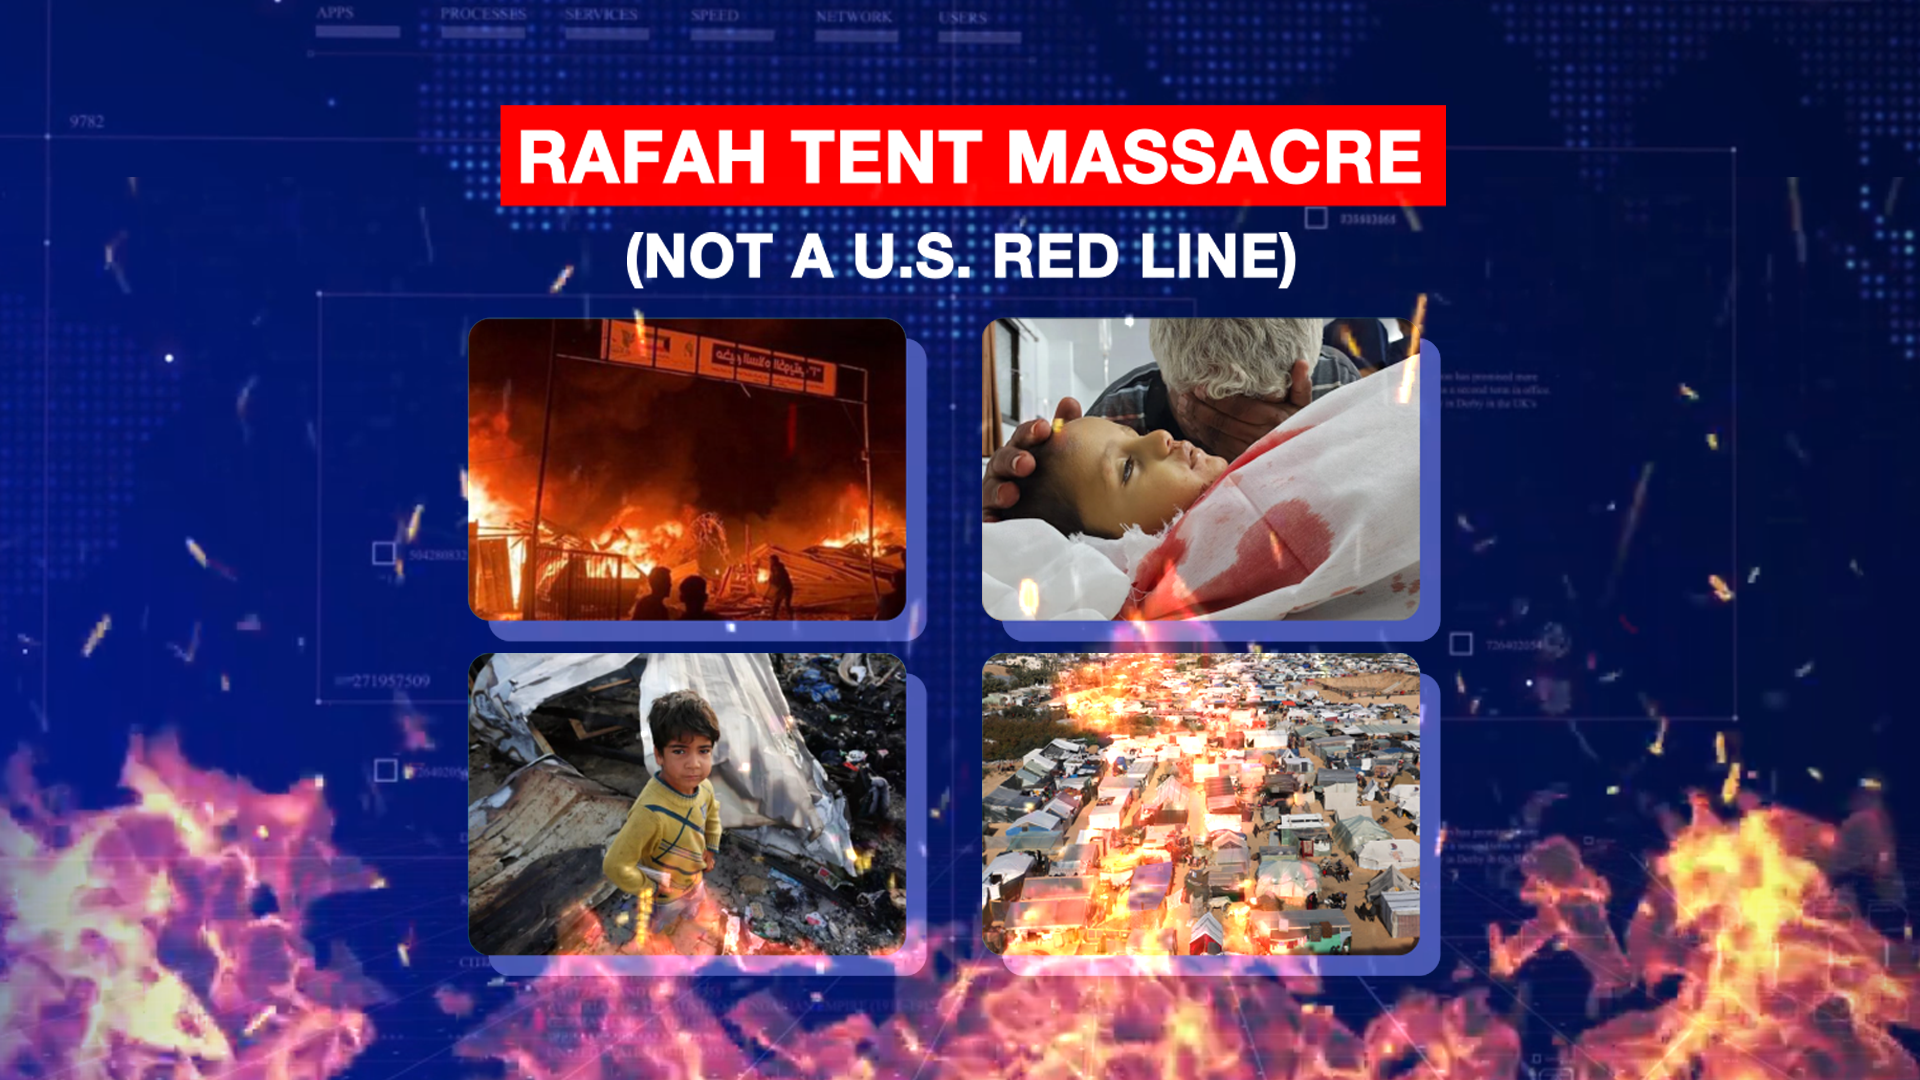 Rafah tent massacre